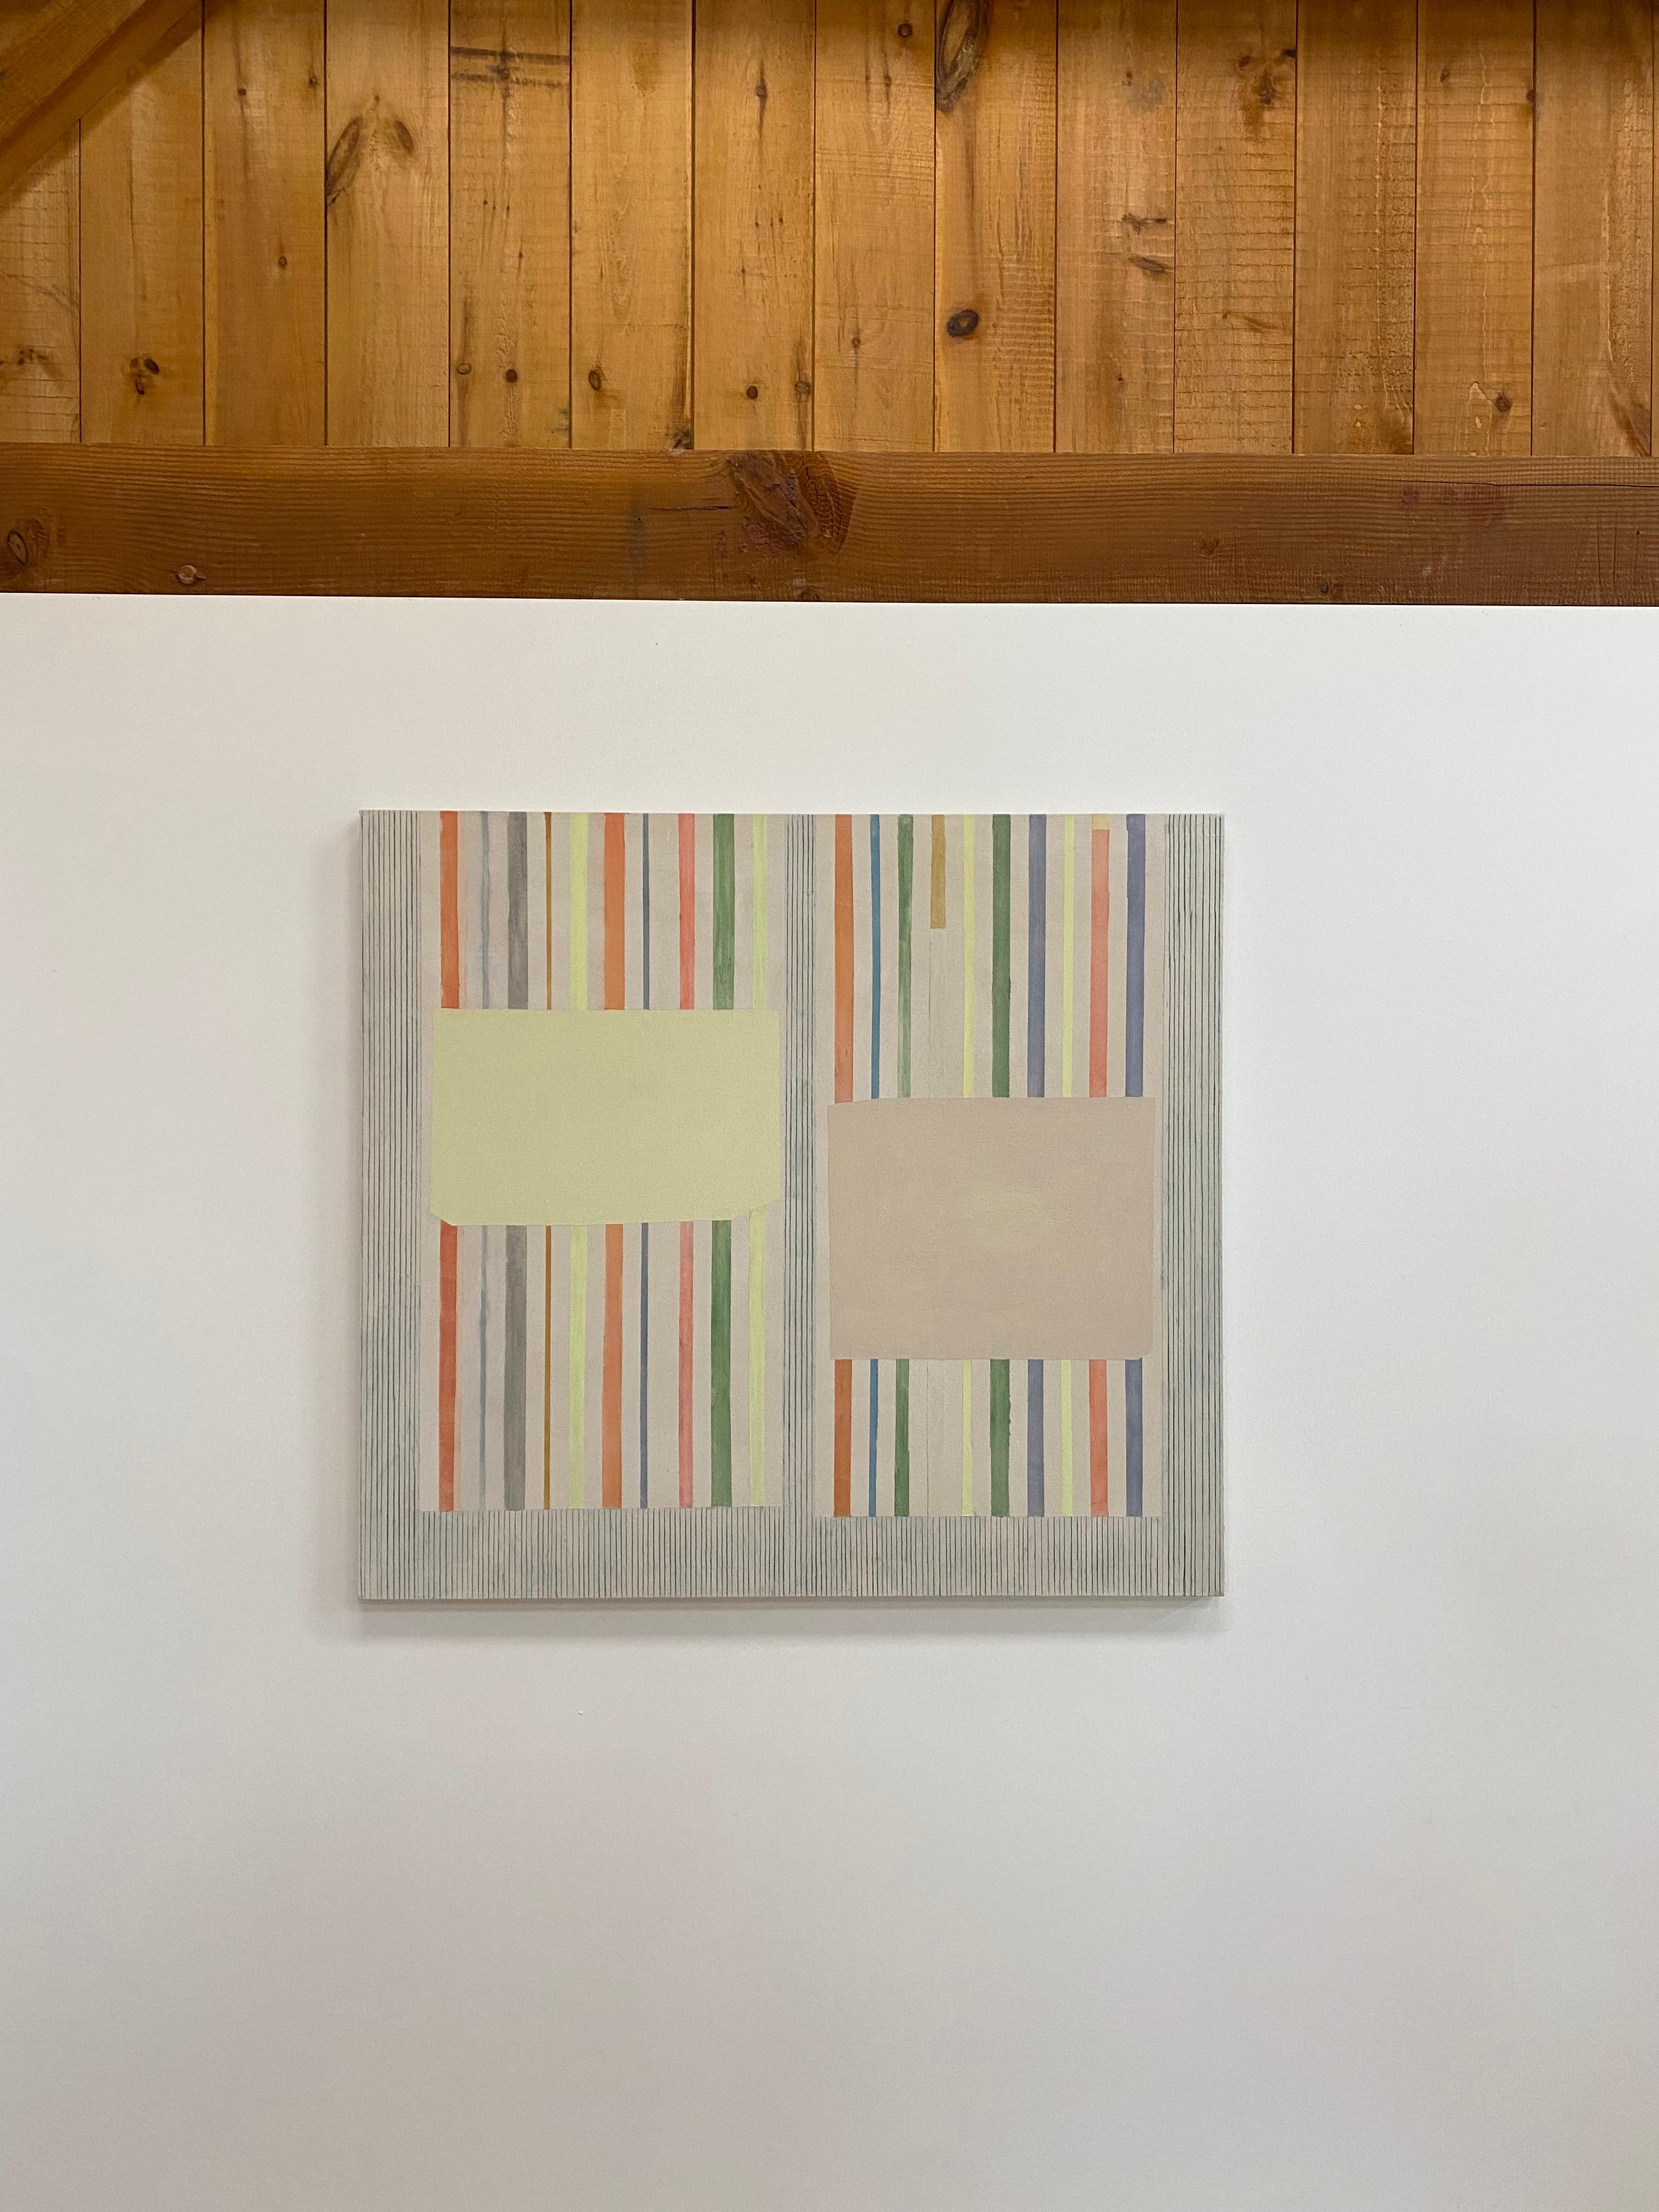 Limegreyrose, Beige, Orange, Green, Lemon Yellow, Gray Stripes, Geometric - Painting by Elizabeth Gourlay